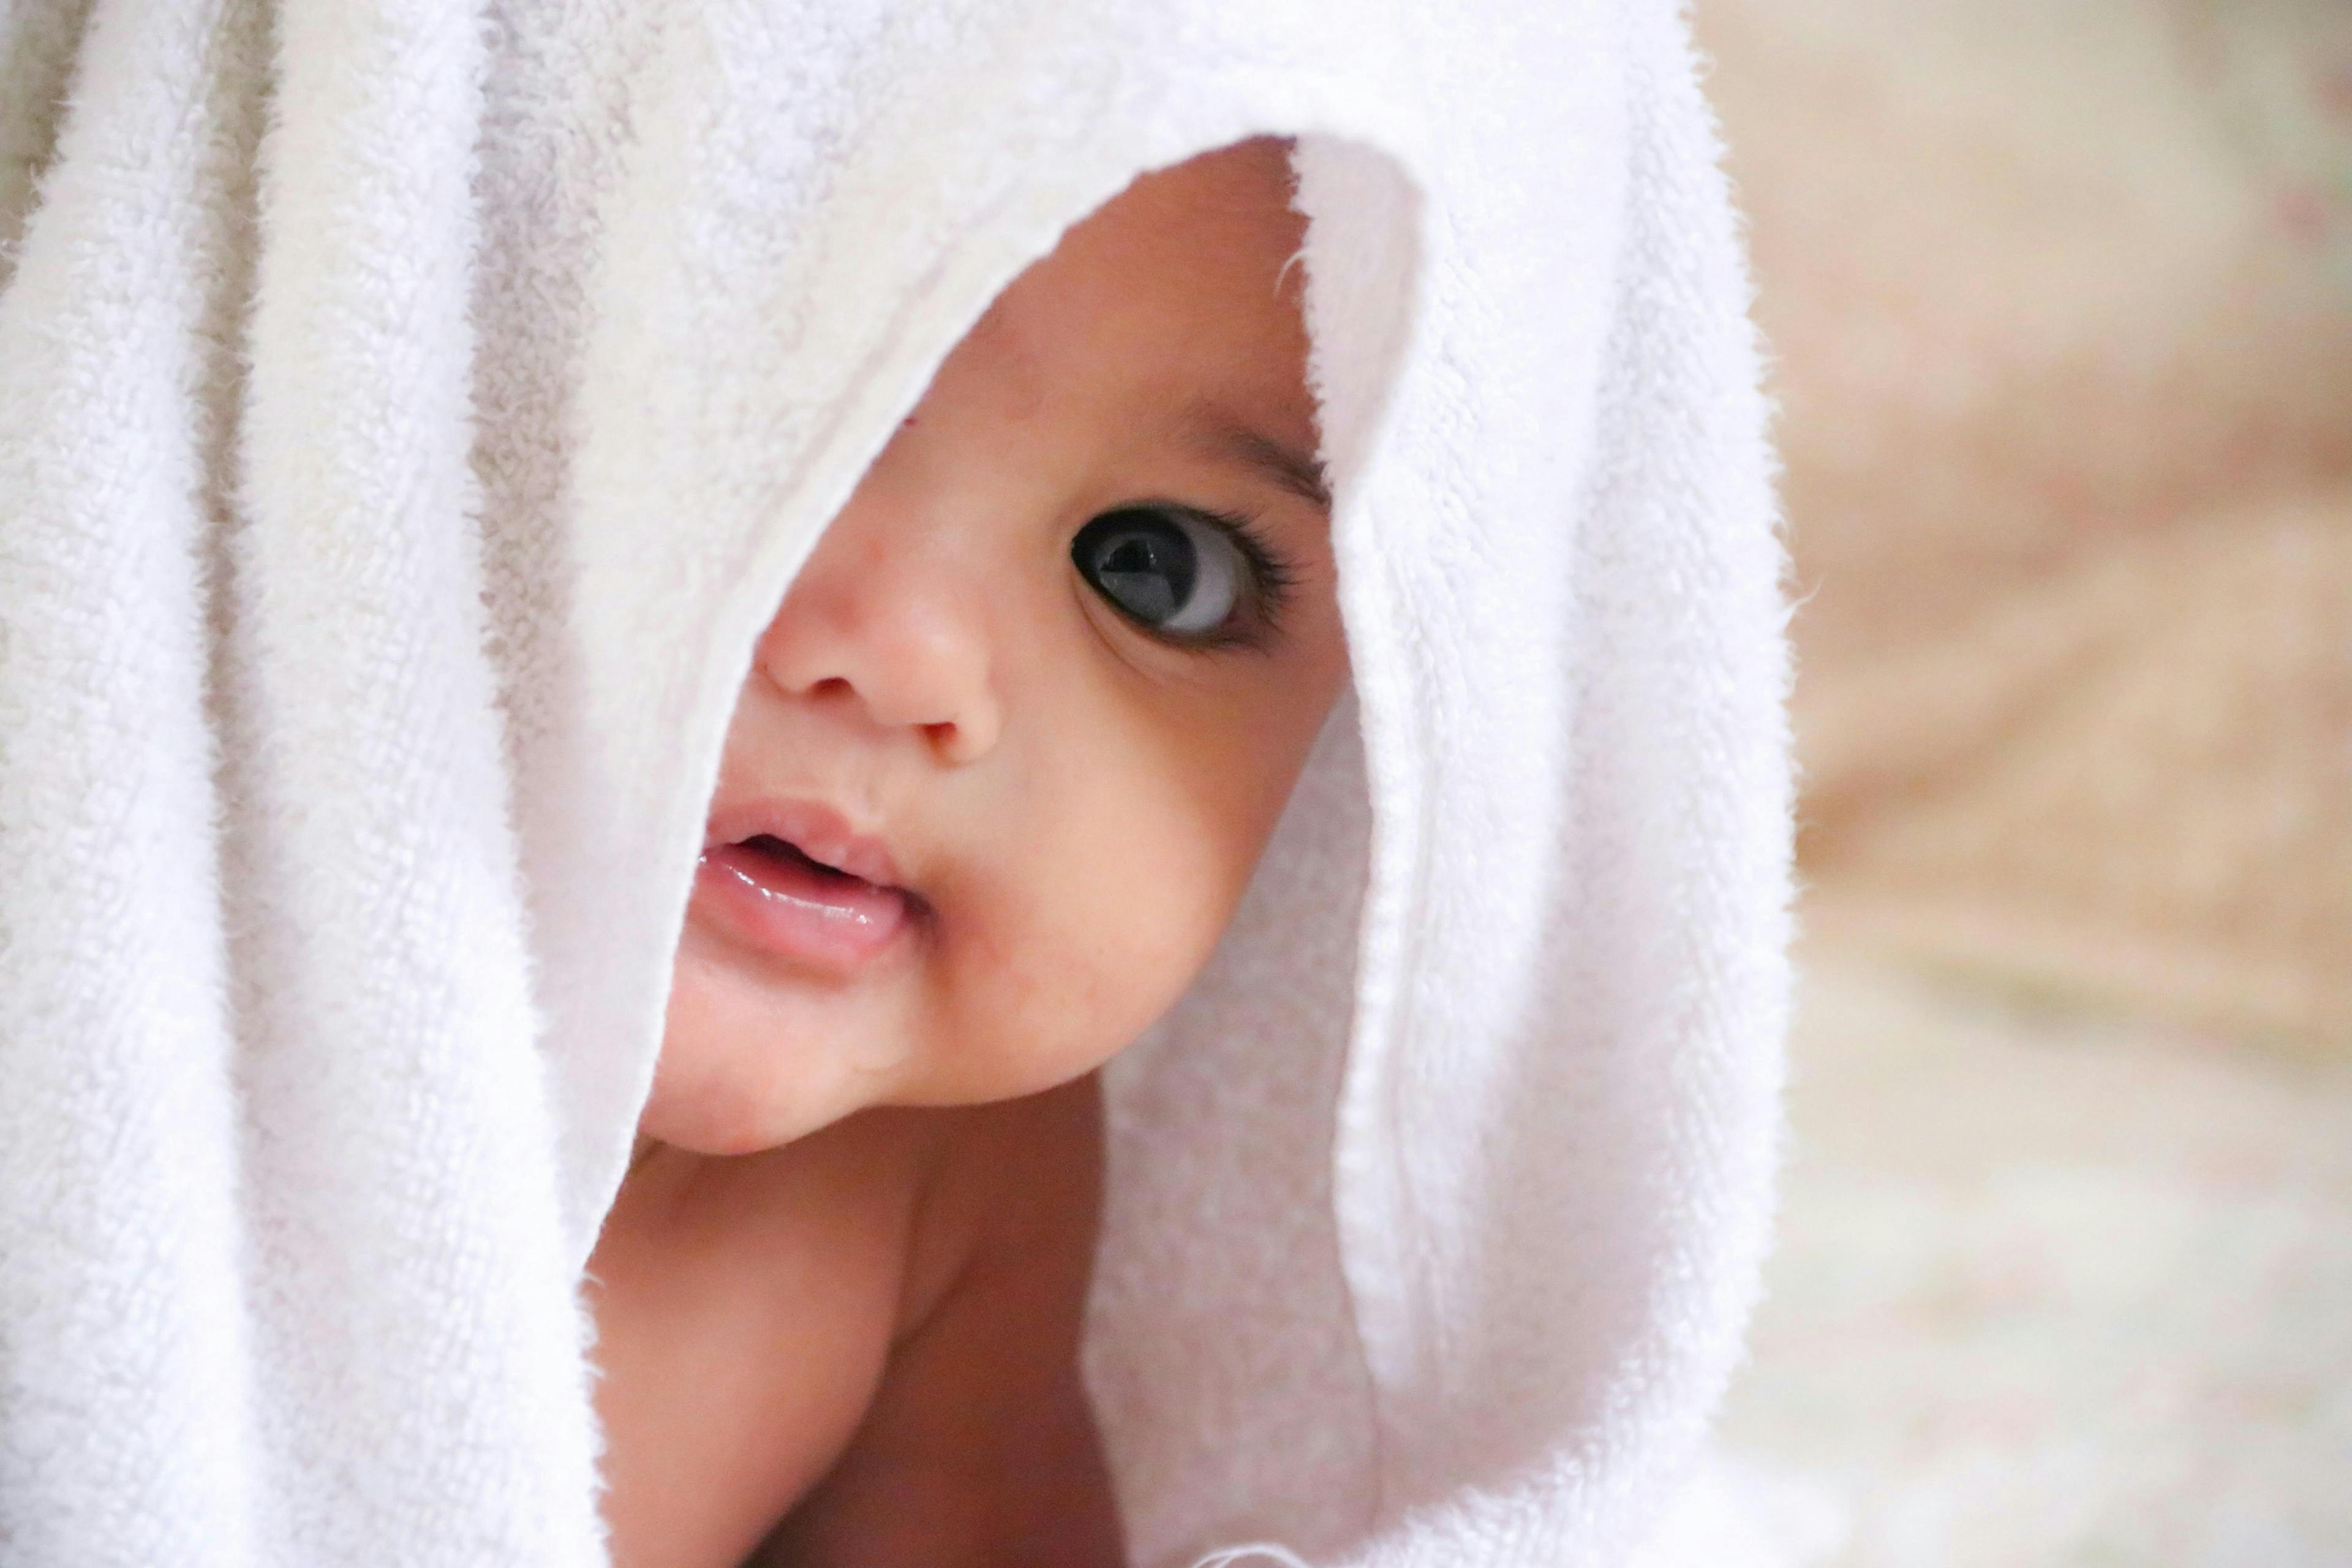 person human face newborn baby towel head